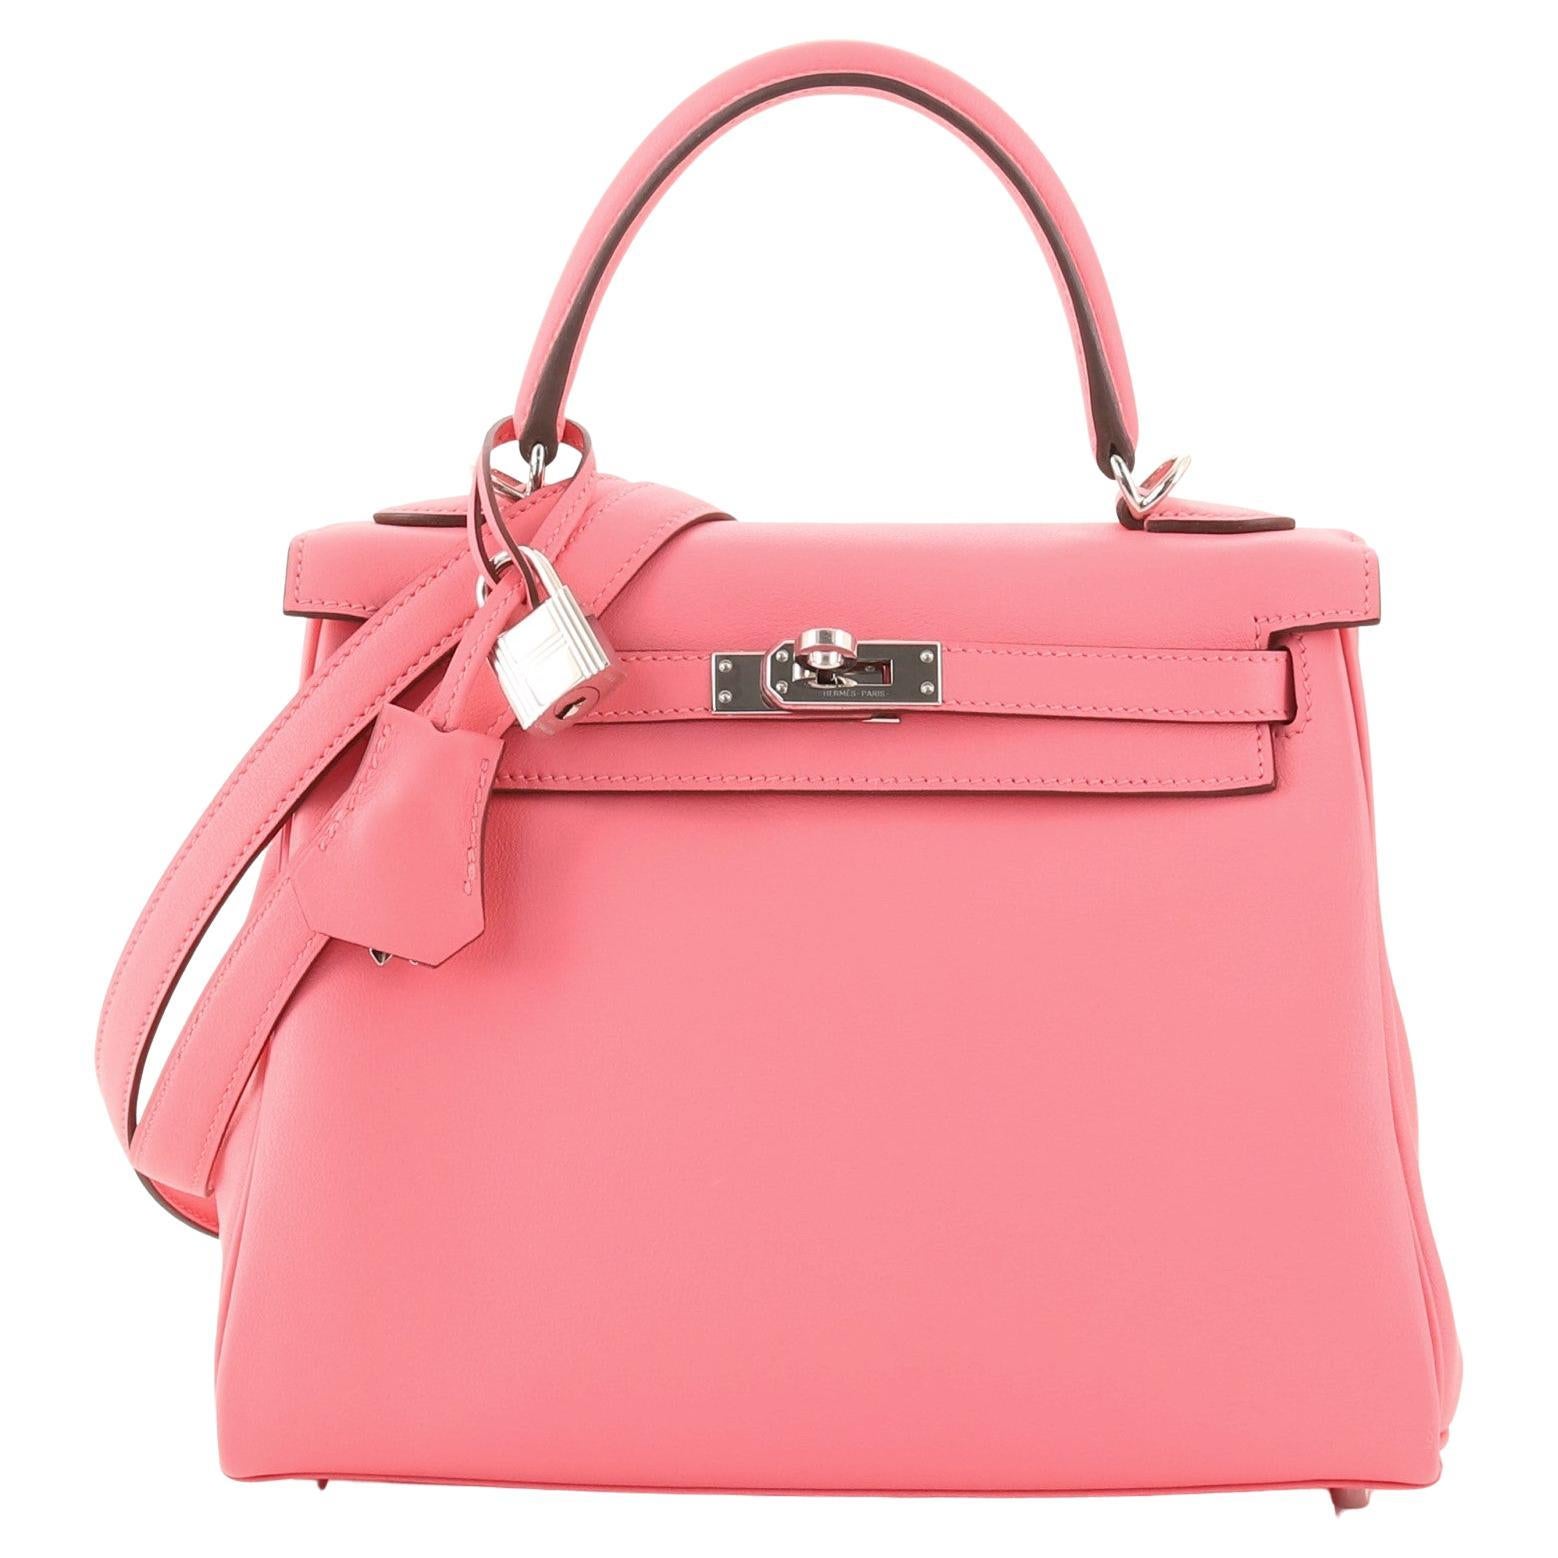 Hermes Kelly Handbag Rose Azalée Swift with Palladium Hardware 25